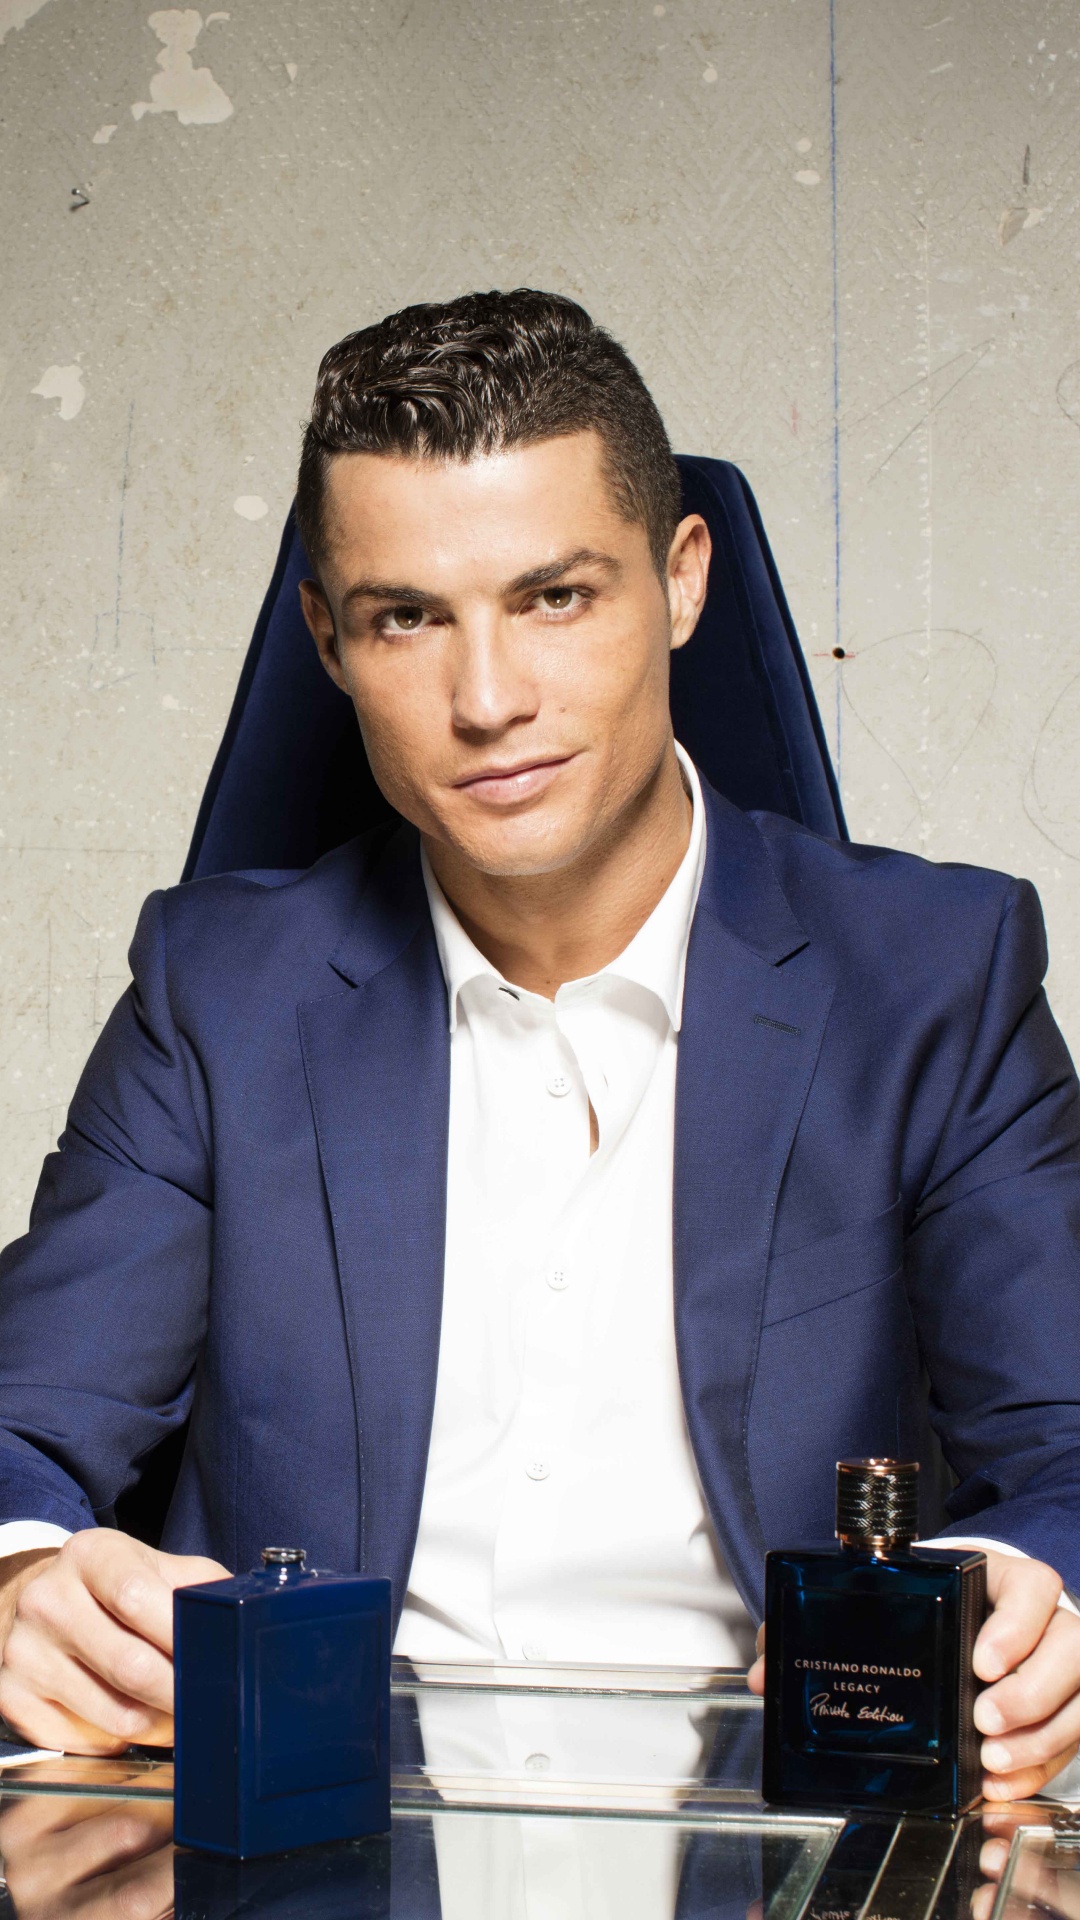 Cristiano Ronaldo, Real Madrid c f, Forehead, Suit, Job. Wallpaper in 1080x1920 Resolution